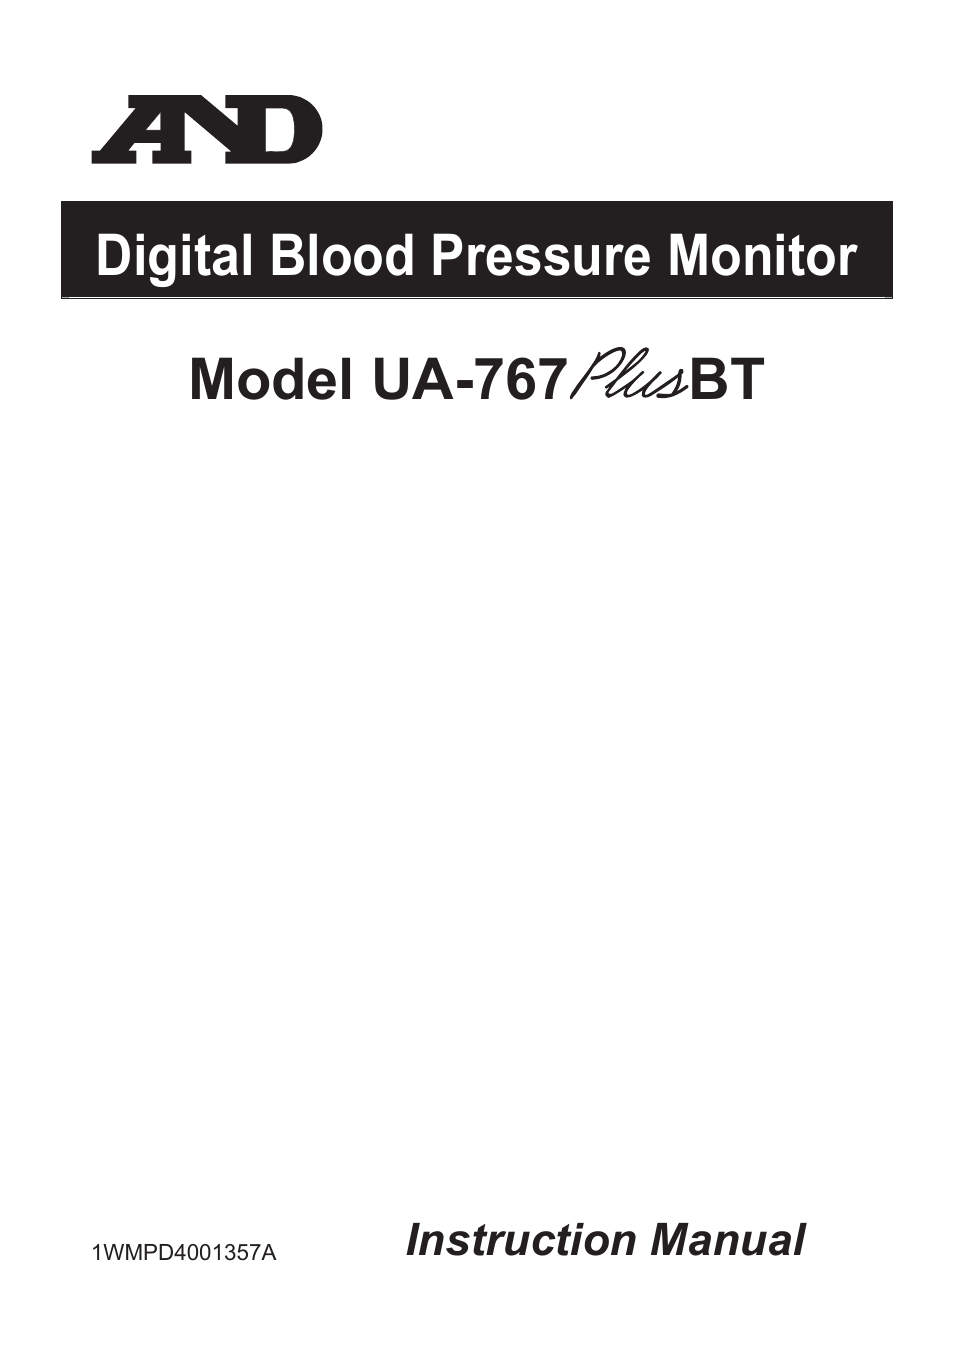 A & D Digital Blood Pressure Monitor UA-767 Plus BT (Page 1)